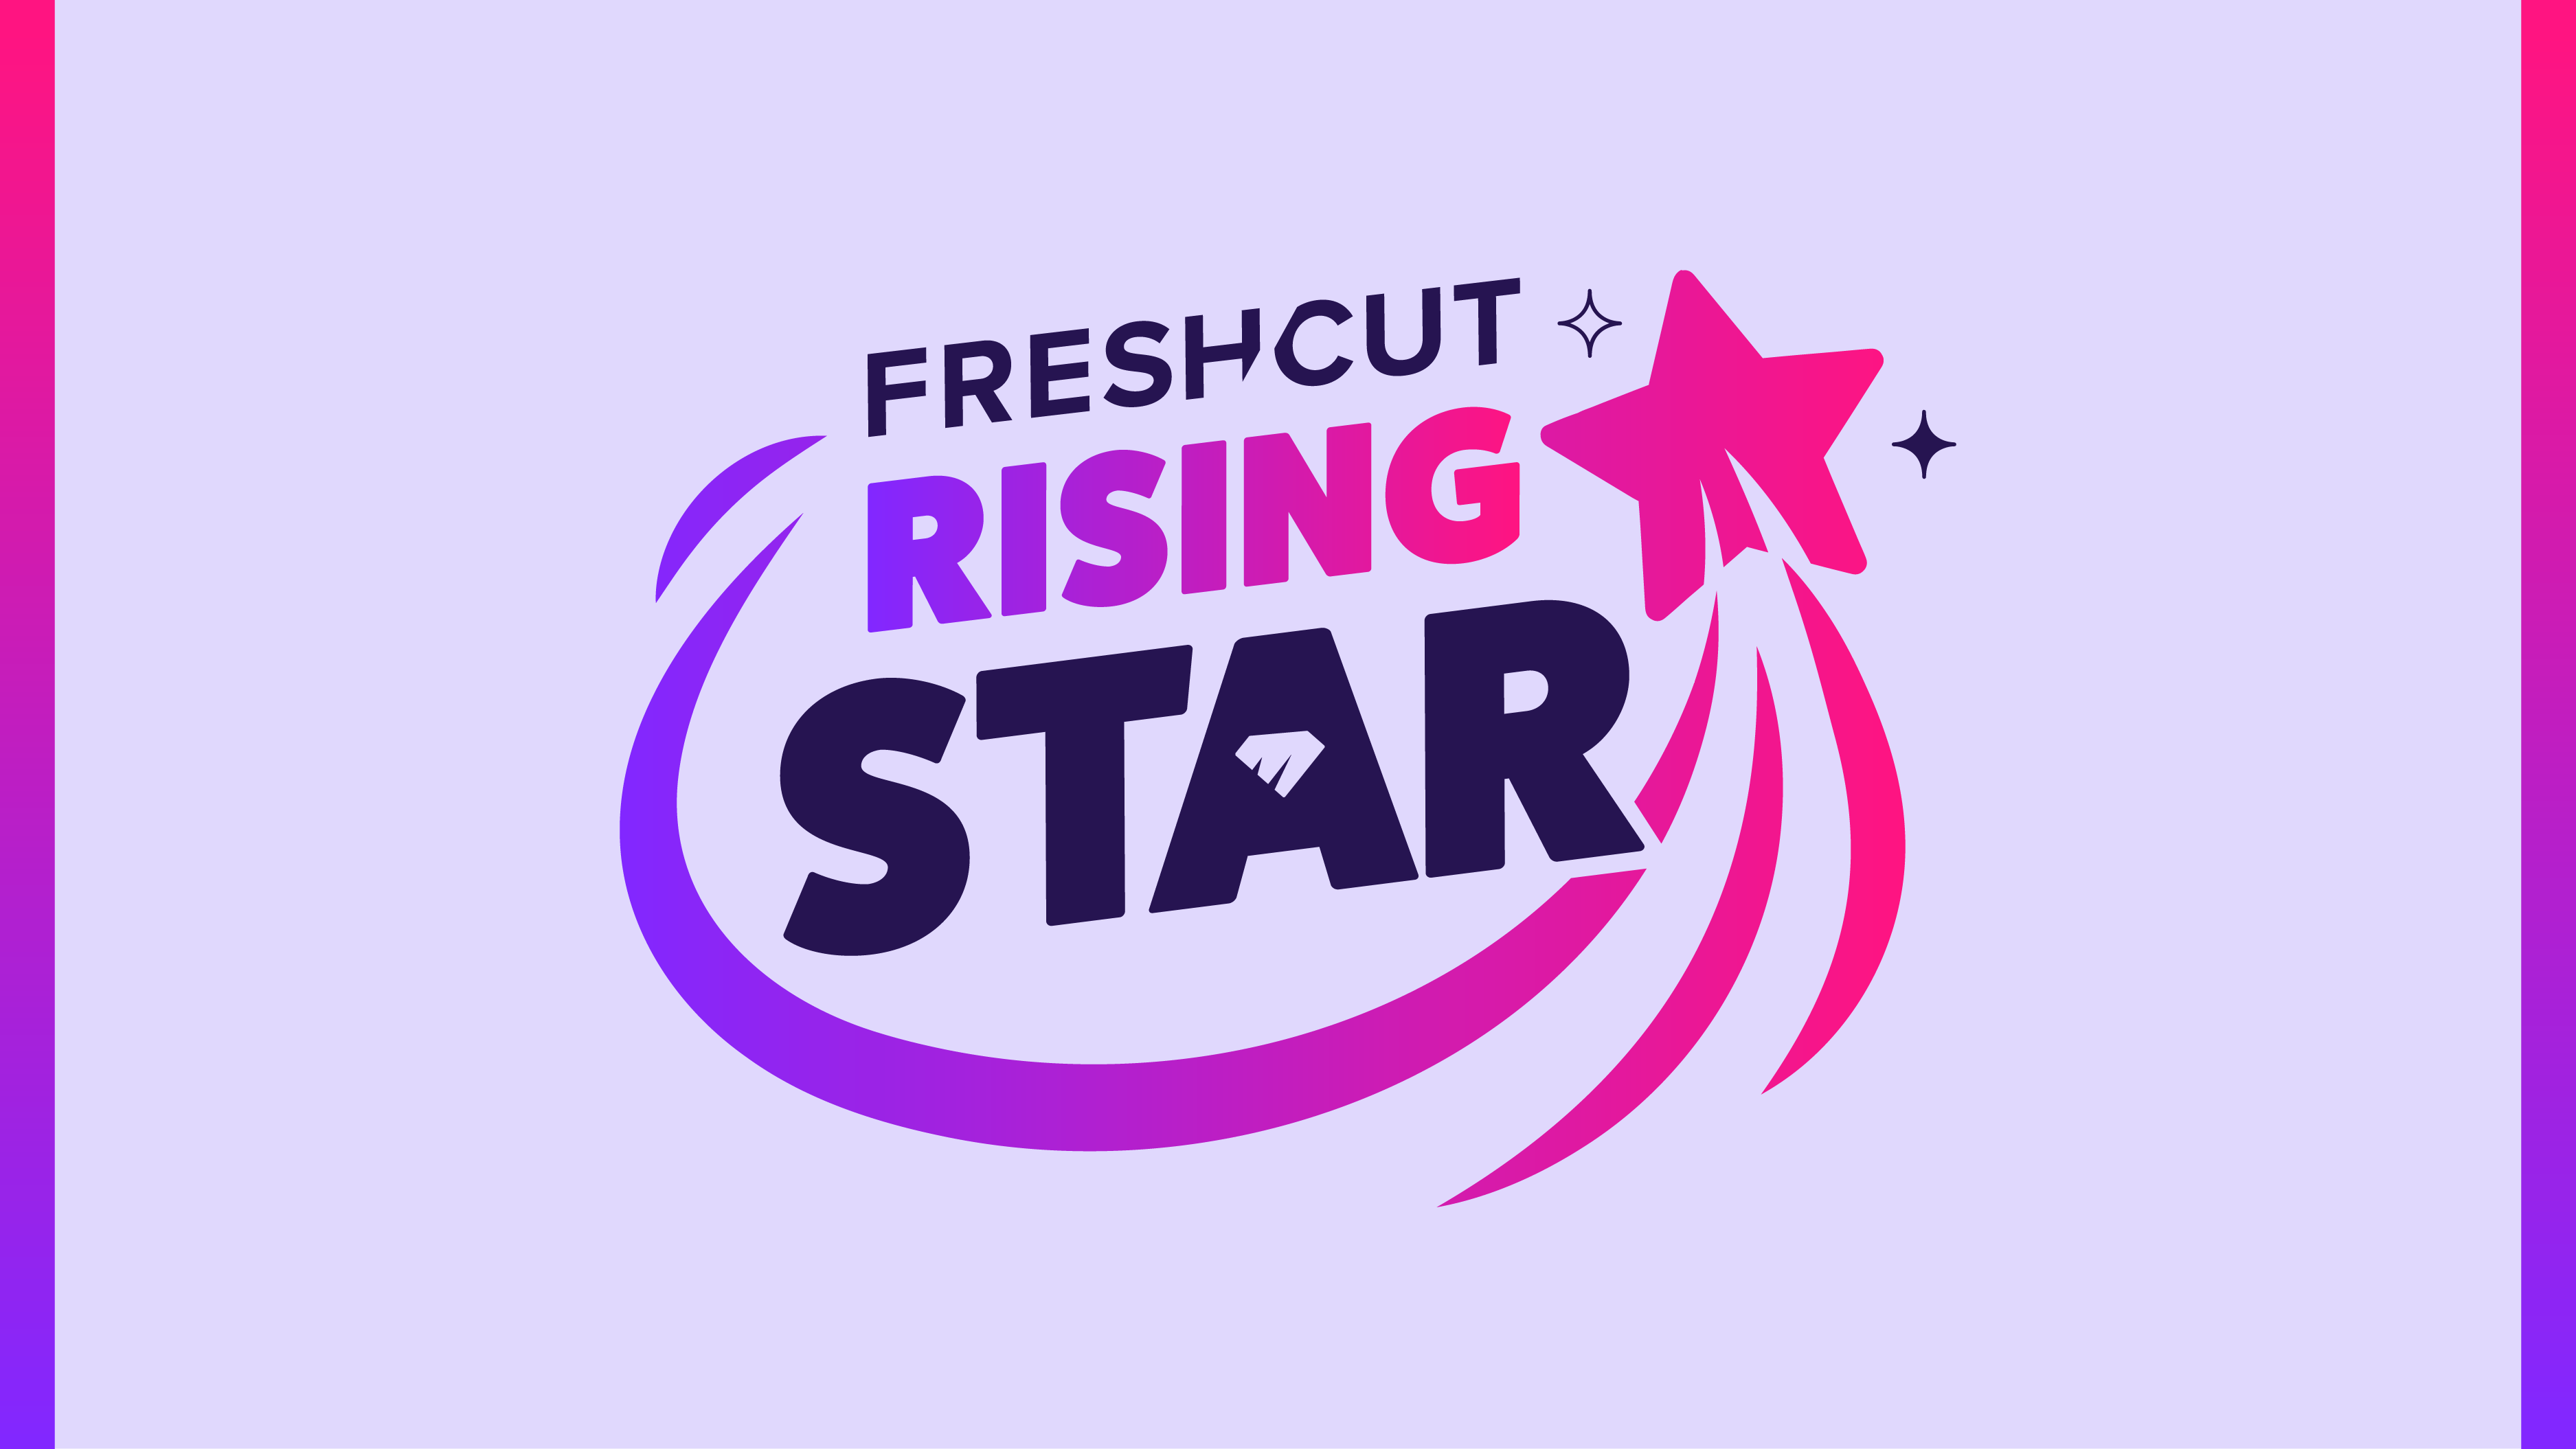 Join the $10,000 FreshCut Rising Star Community Vote